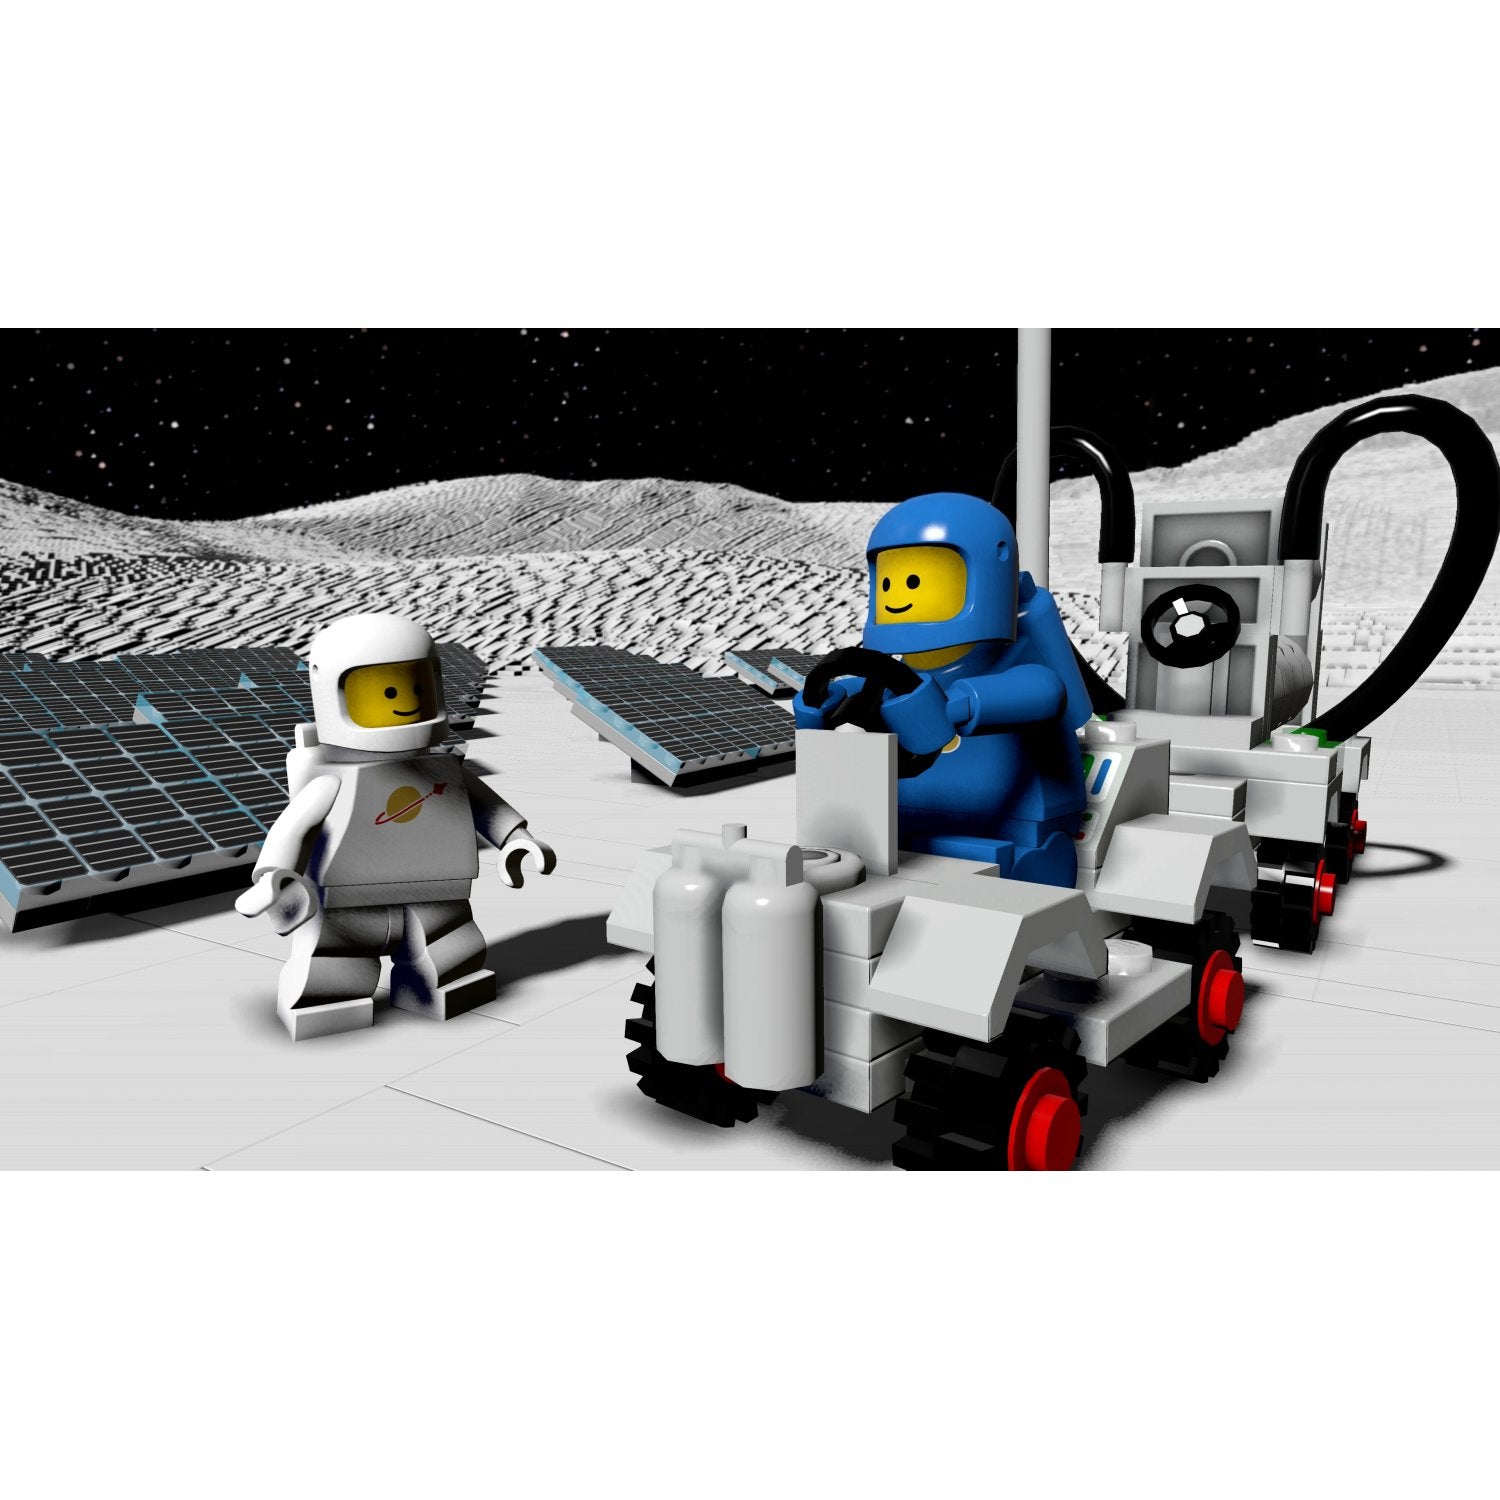 NSW LEGO Worlds